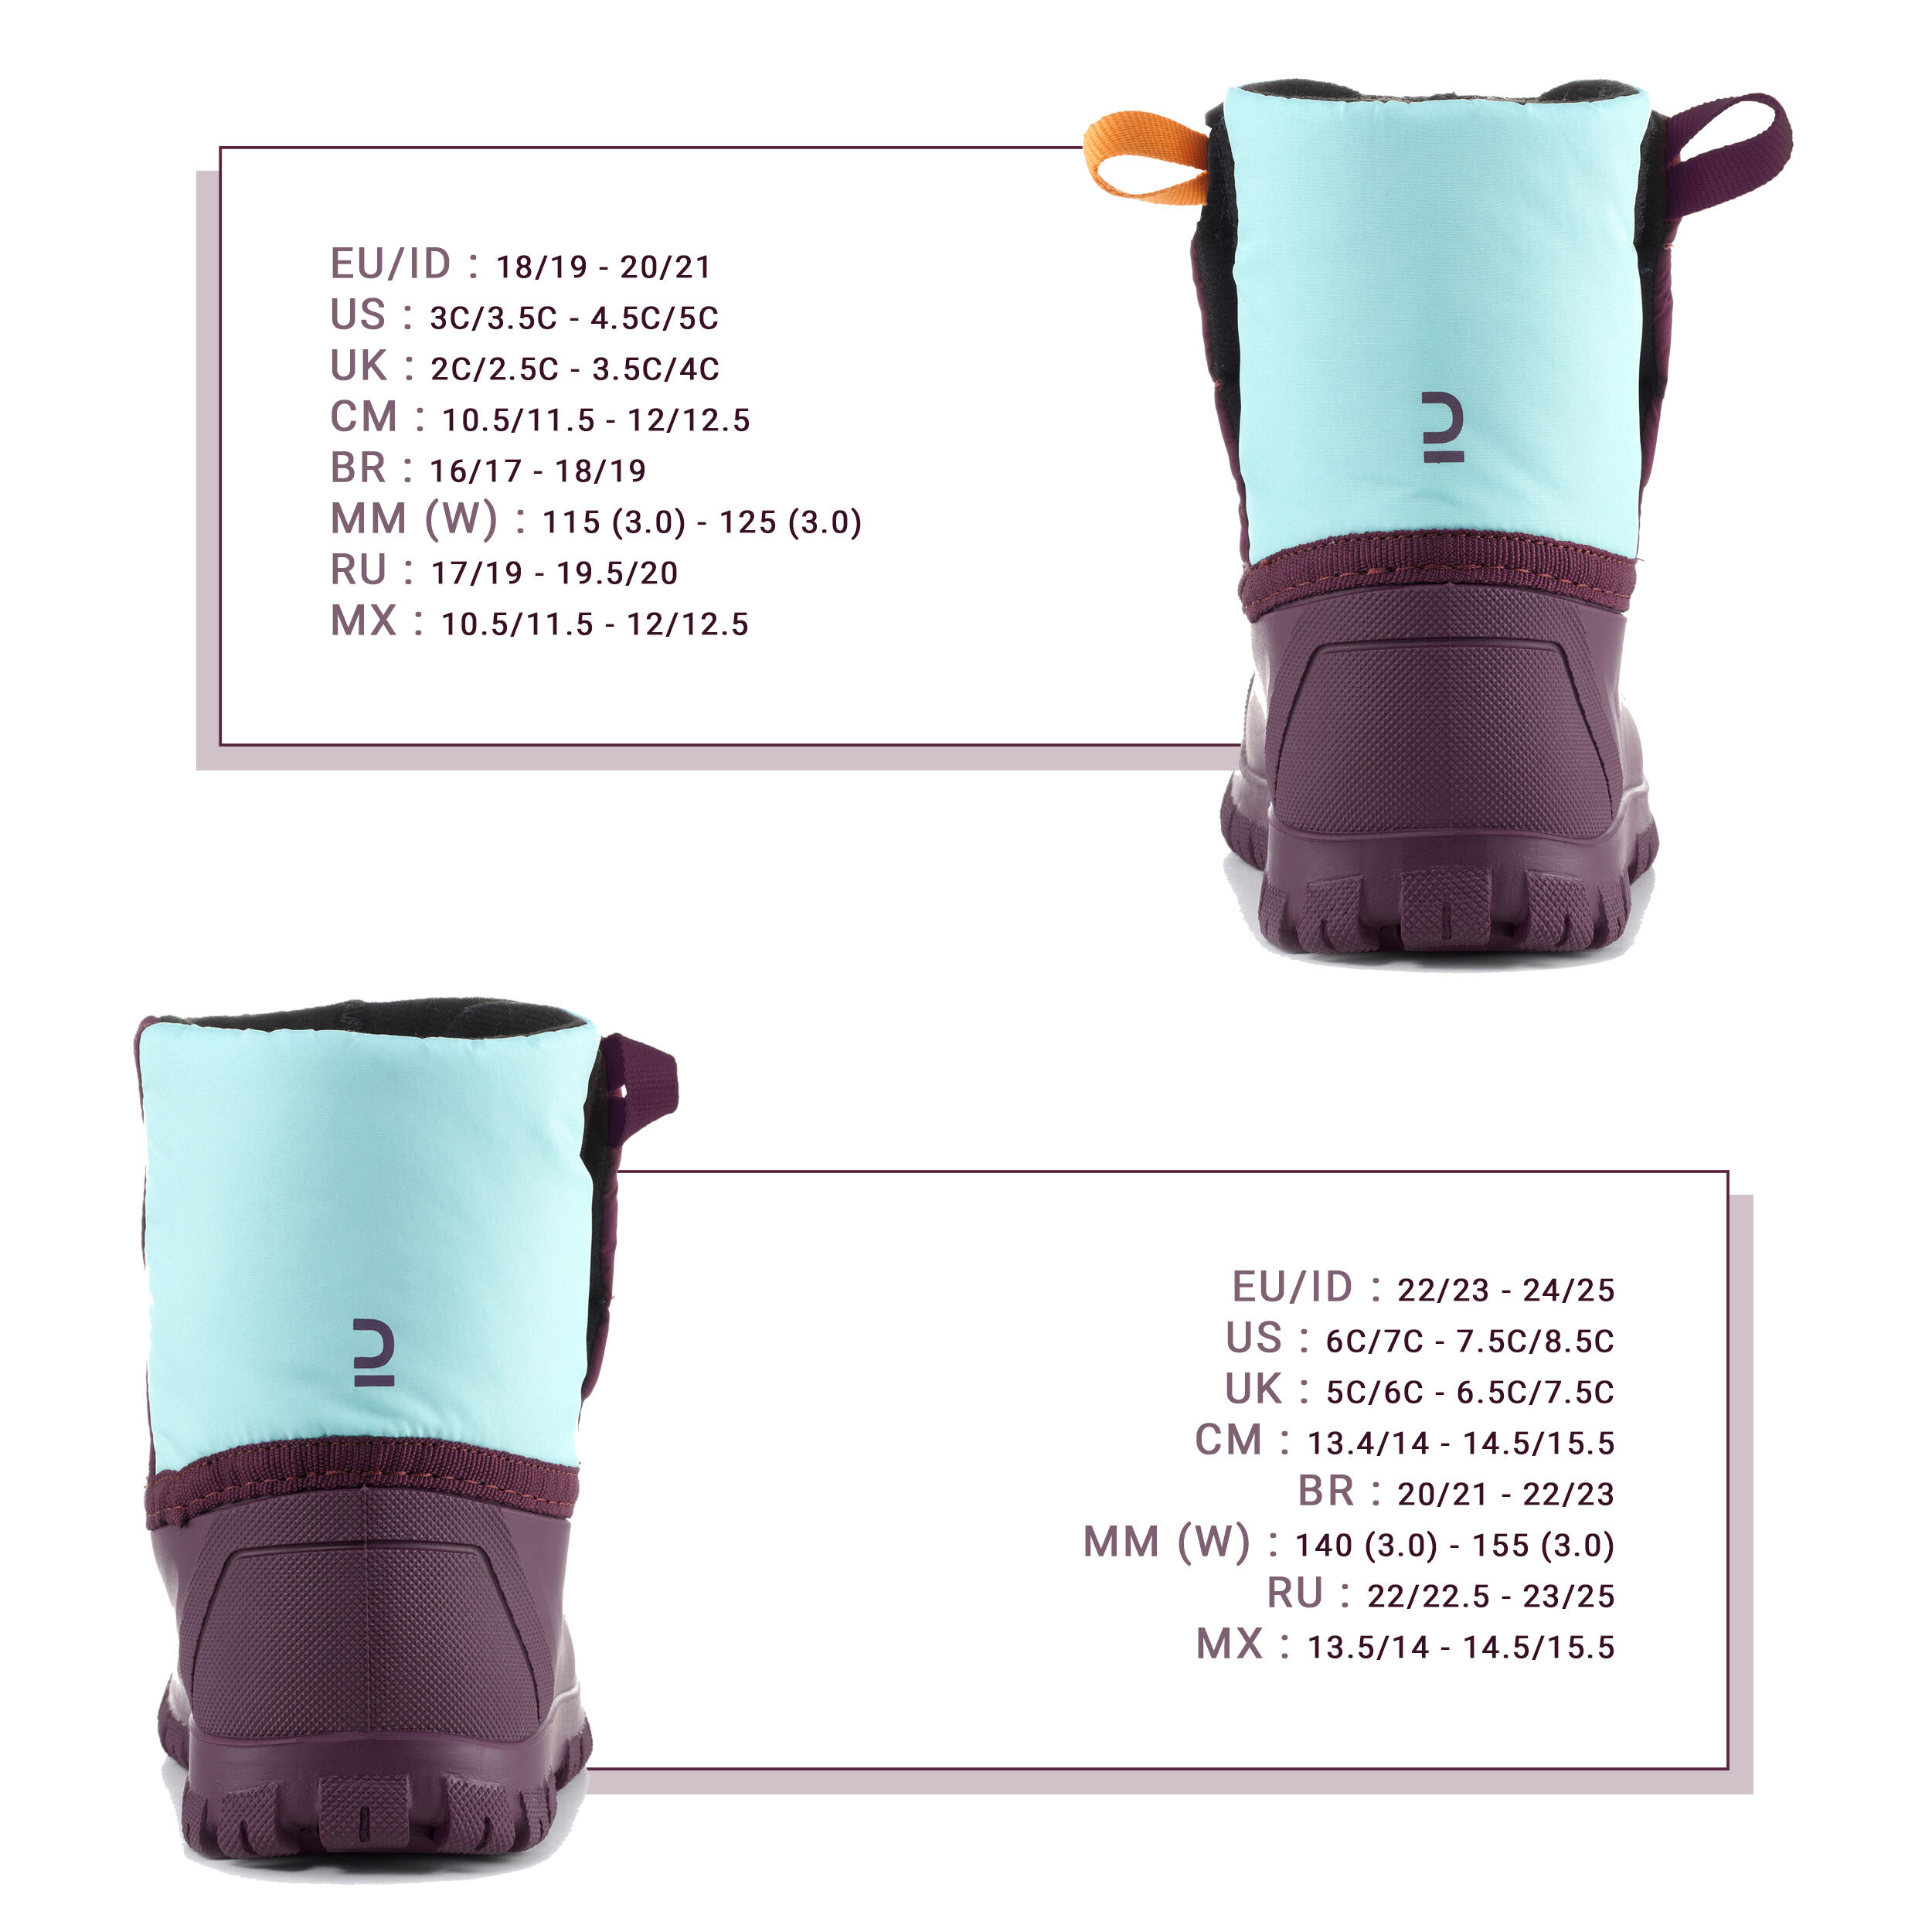 Kids' Winter Boots - Warm 500 Purple - WEDZE